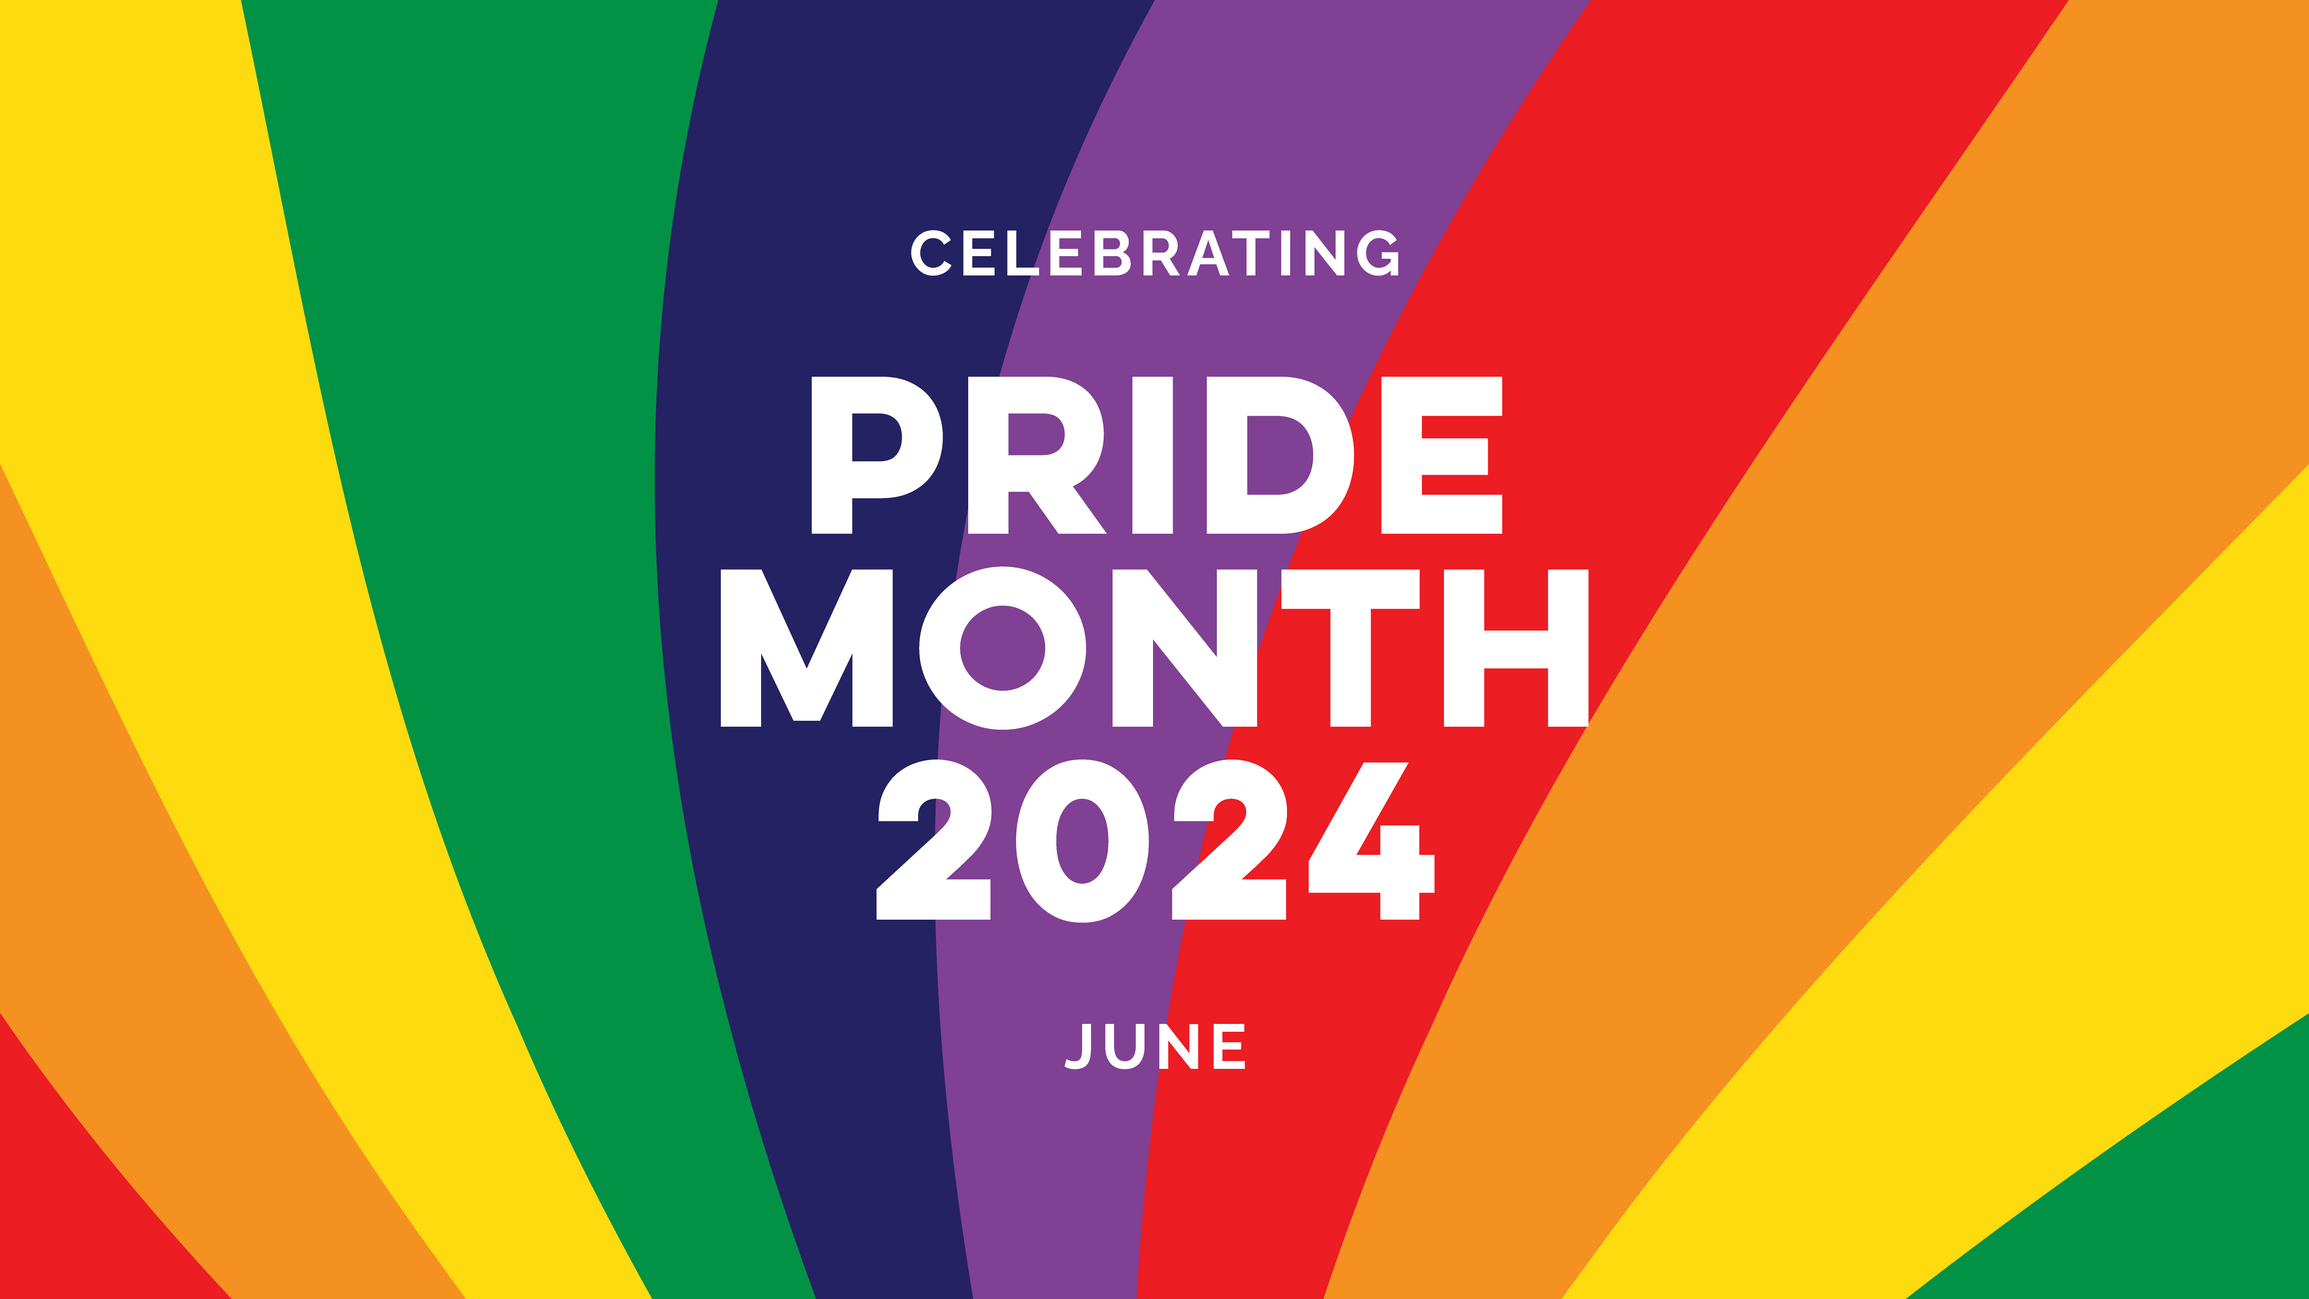 Celebrating pride month 2024